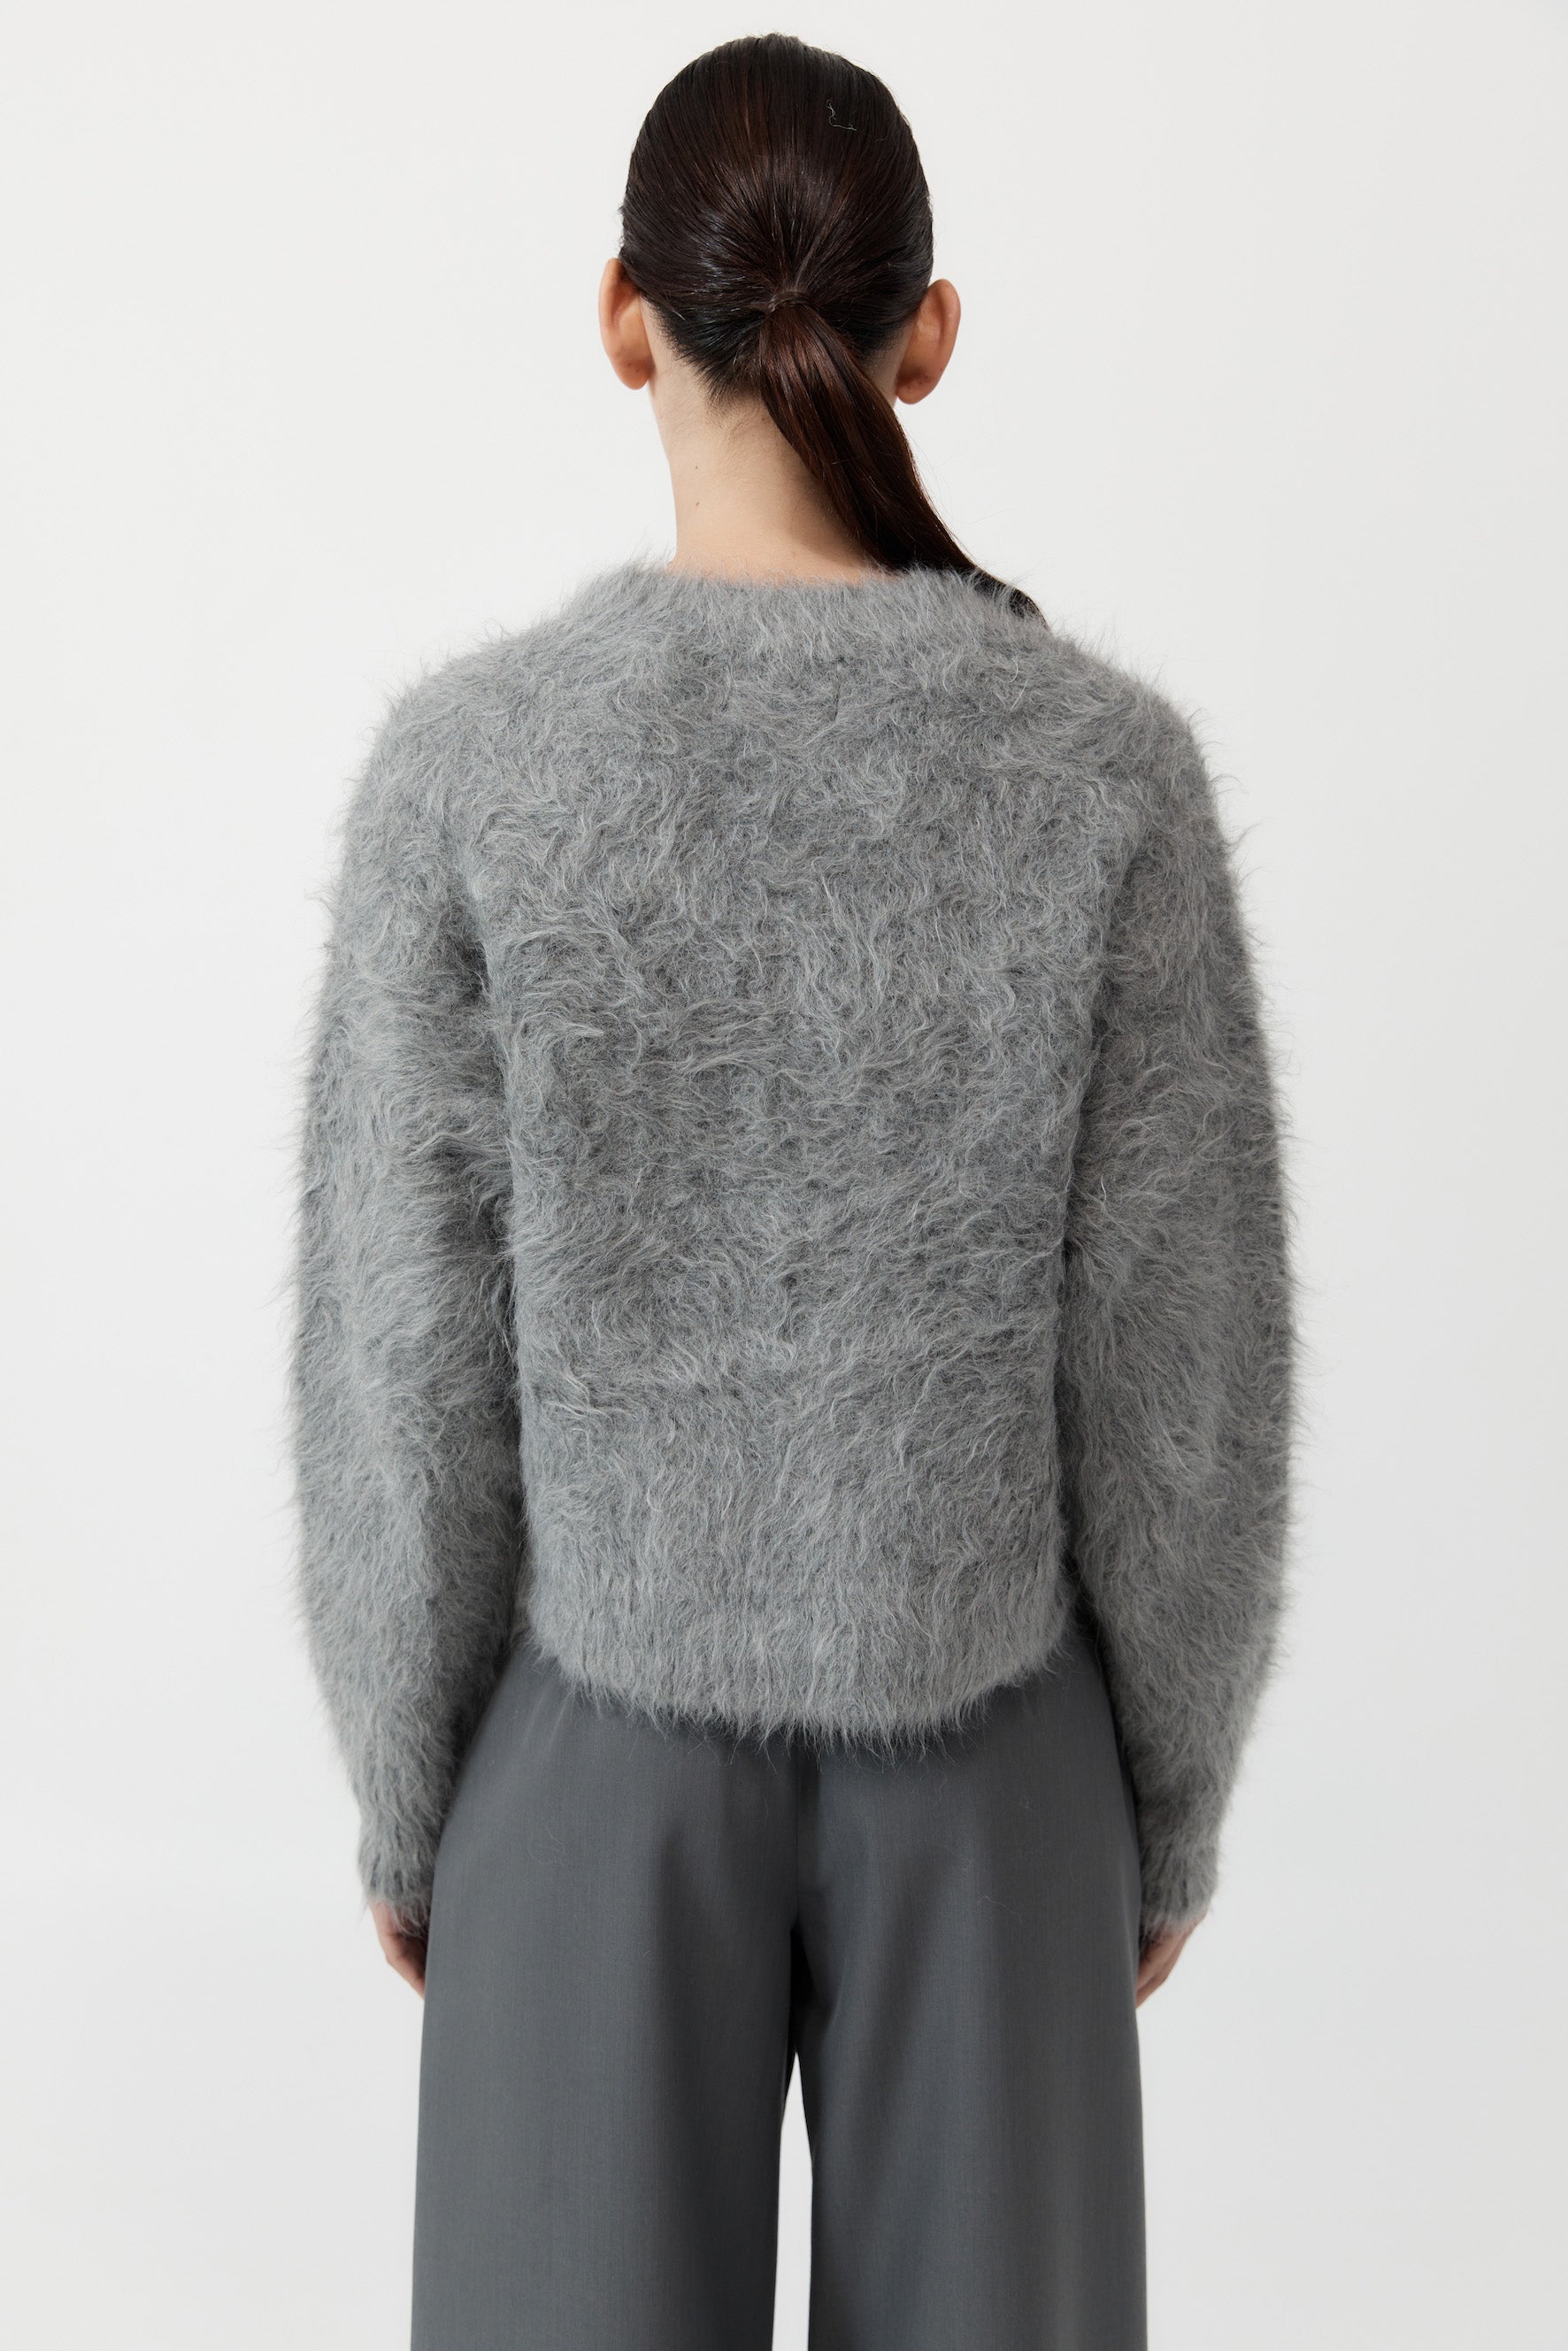 St Agni | Alpaca Sweater - Soft Grey